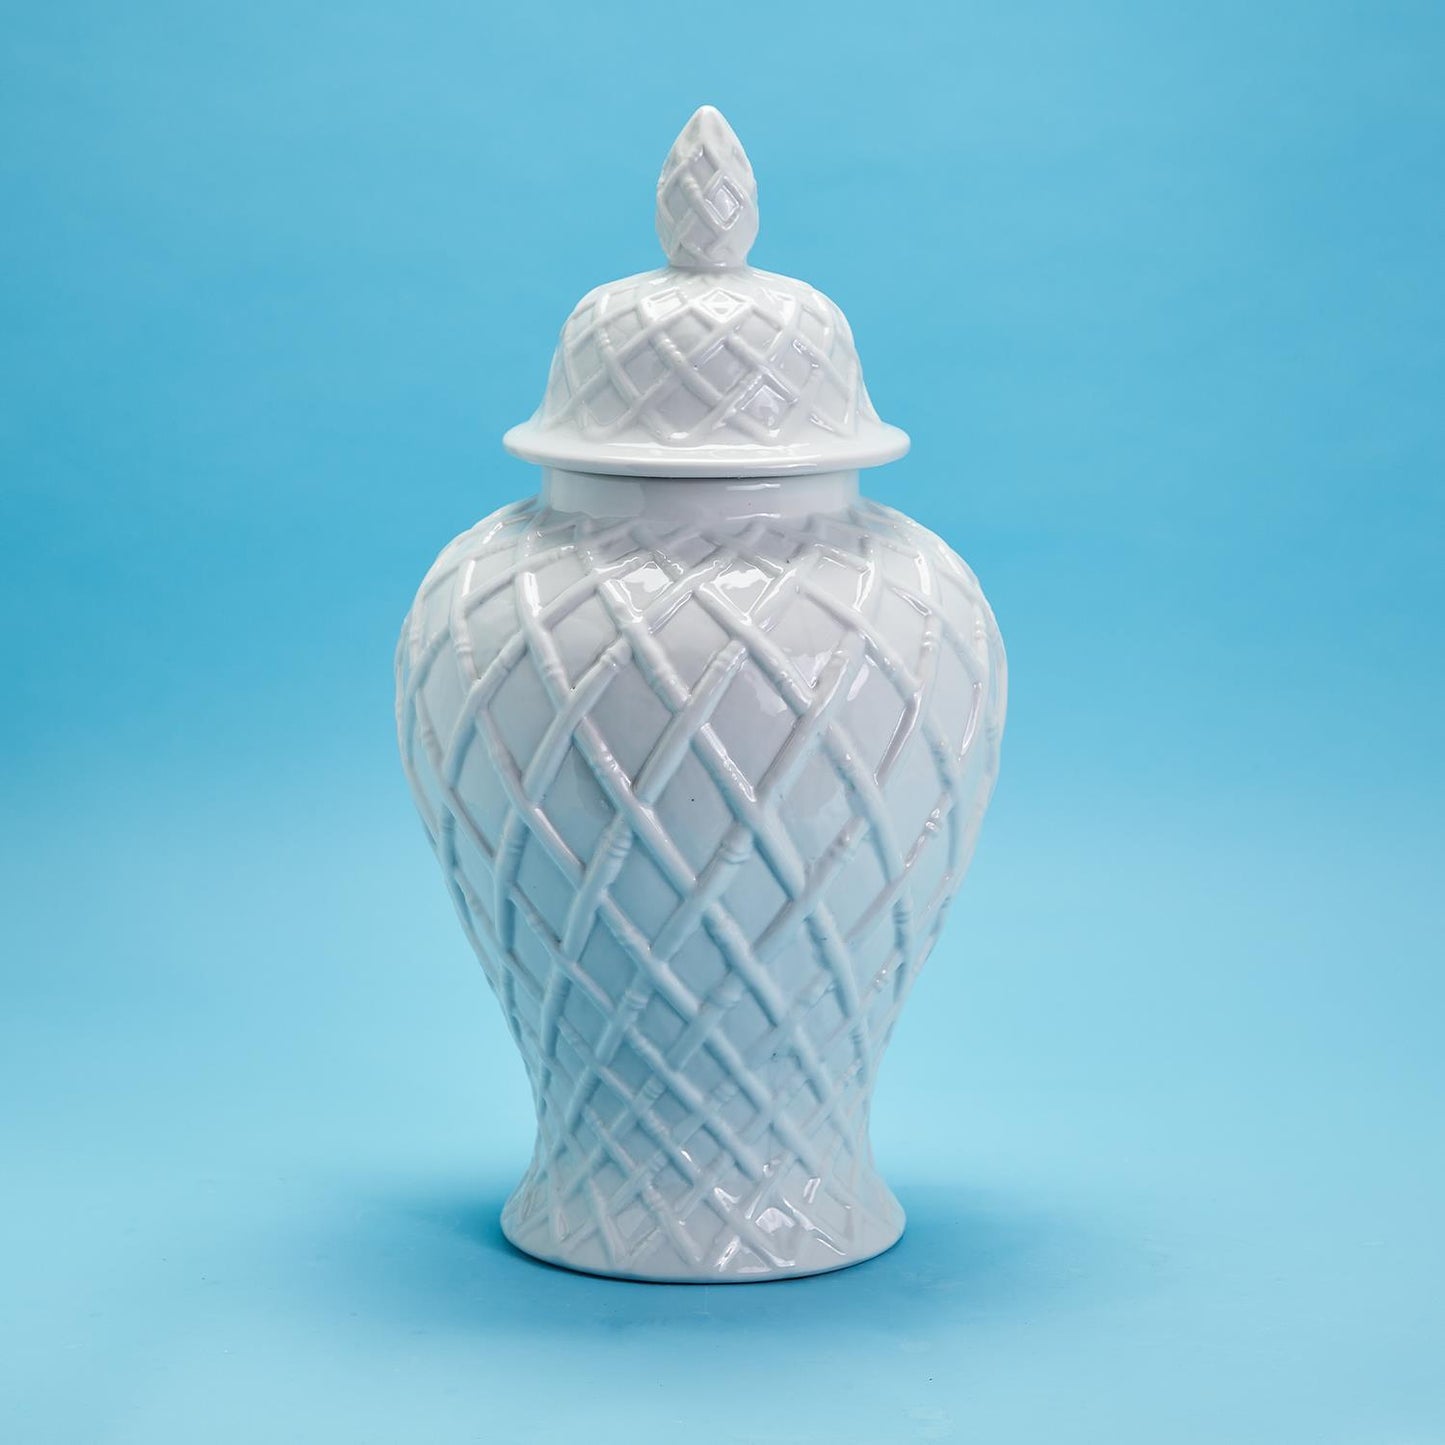 Faux Bamboo Fretwork Decorative Temple Jar - Ceramic